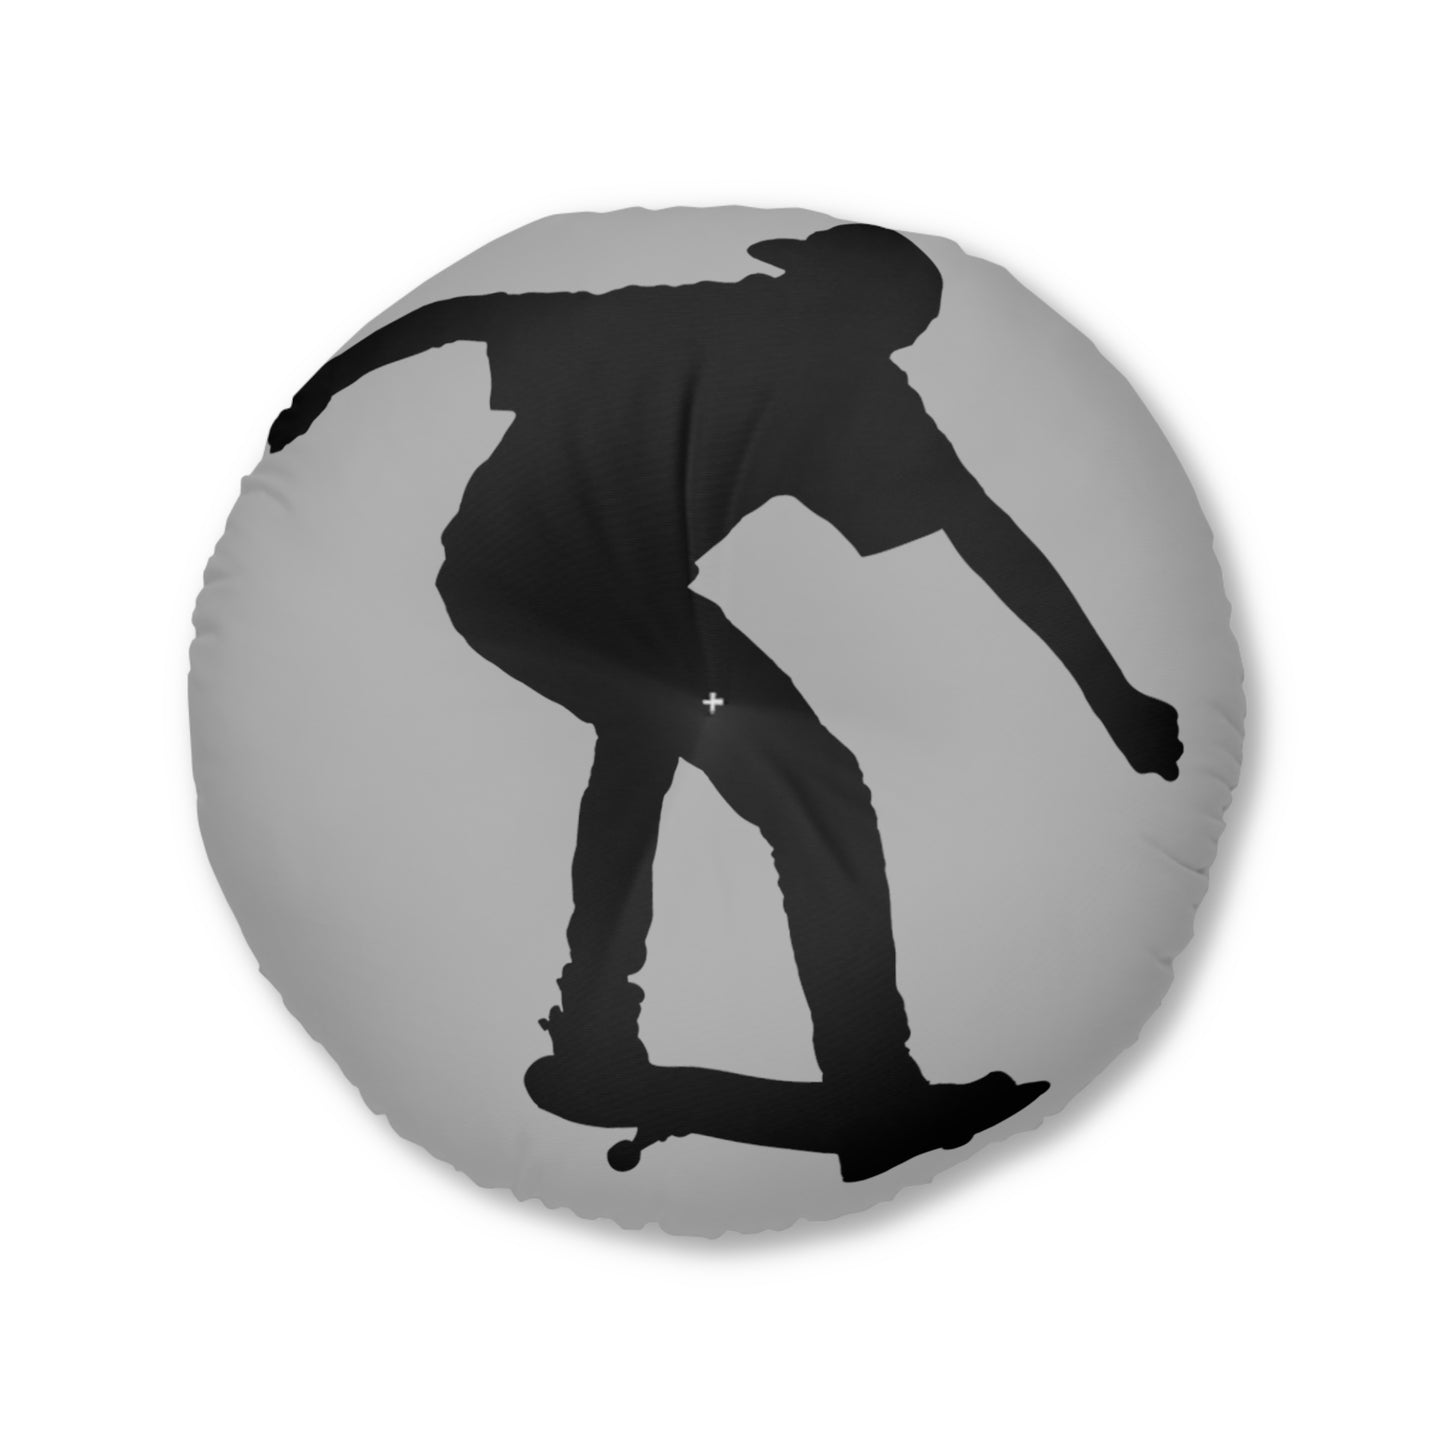 Tufted Floor Pillow, Round: Skateboarding Lite Grey